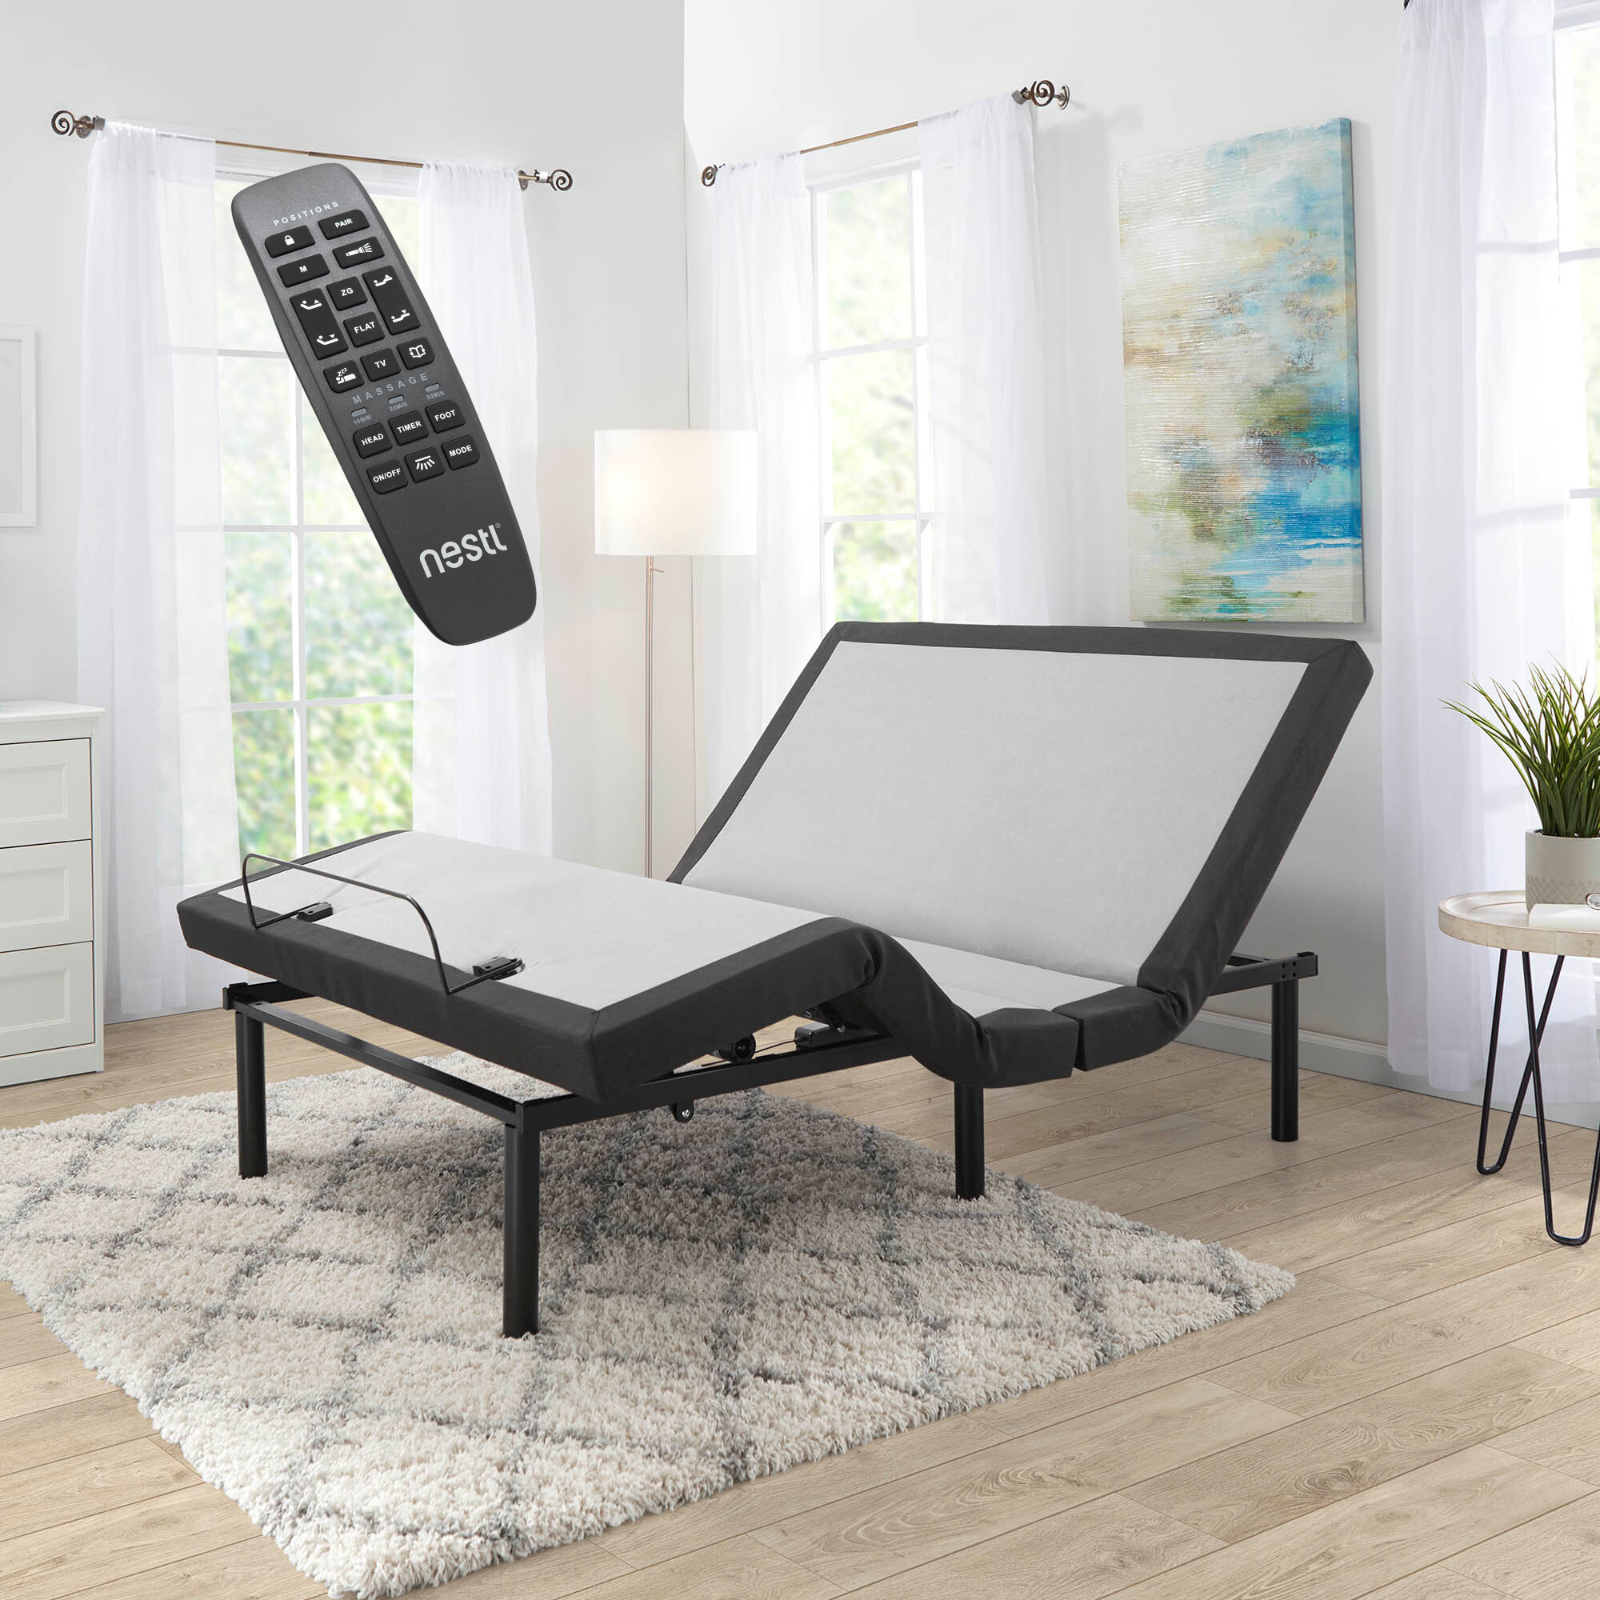 Image 1 - Adjustable Massage Bed Frame Base Wireless Remote USB Ports and LED Light